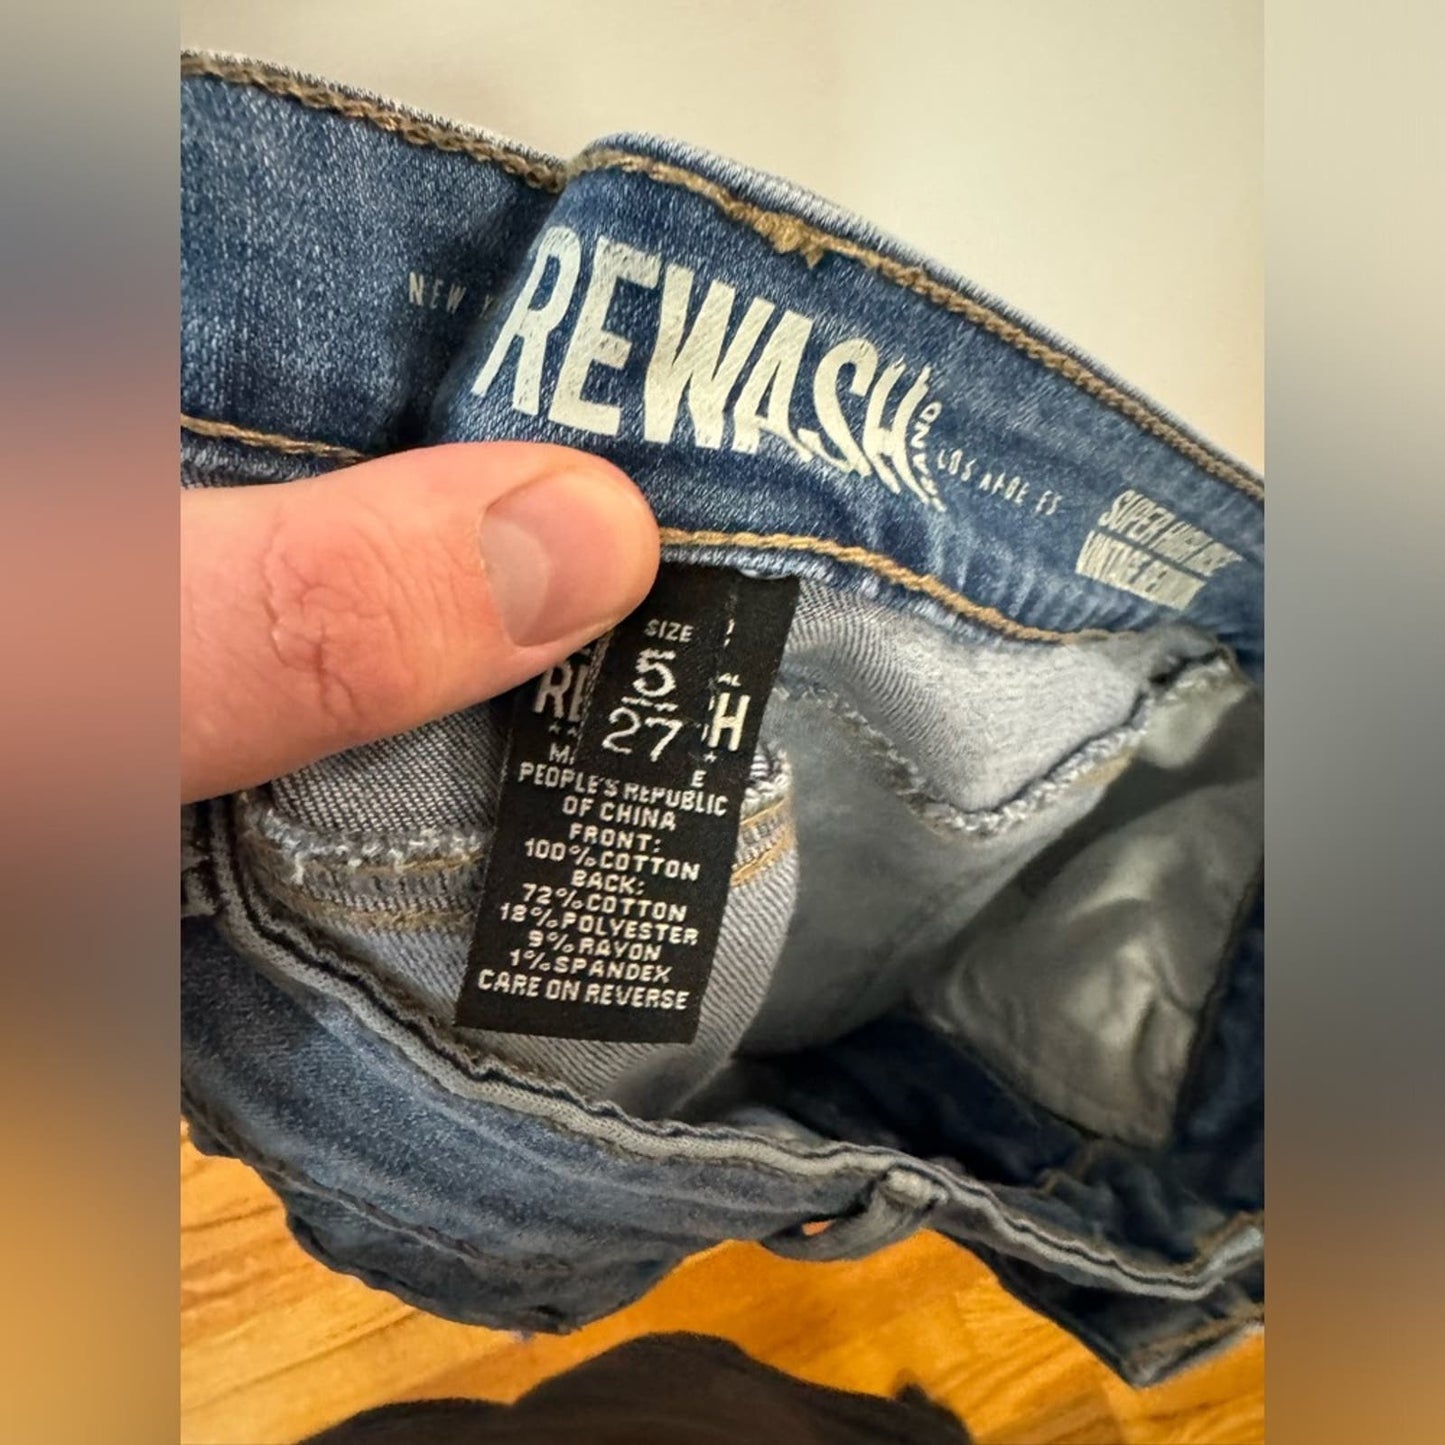 Used Size 5 Rewash Super High Rise Jean Shorts